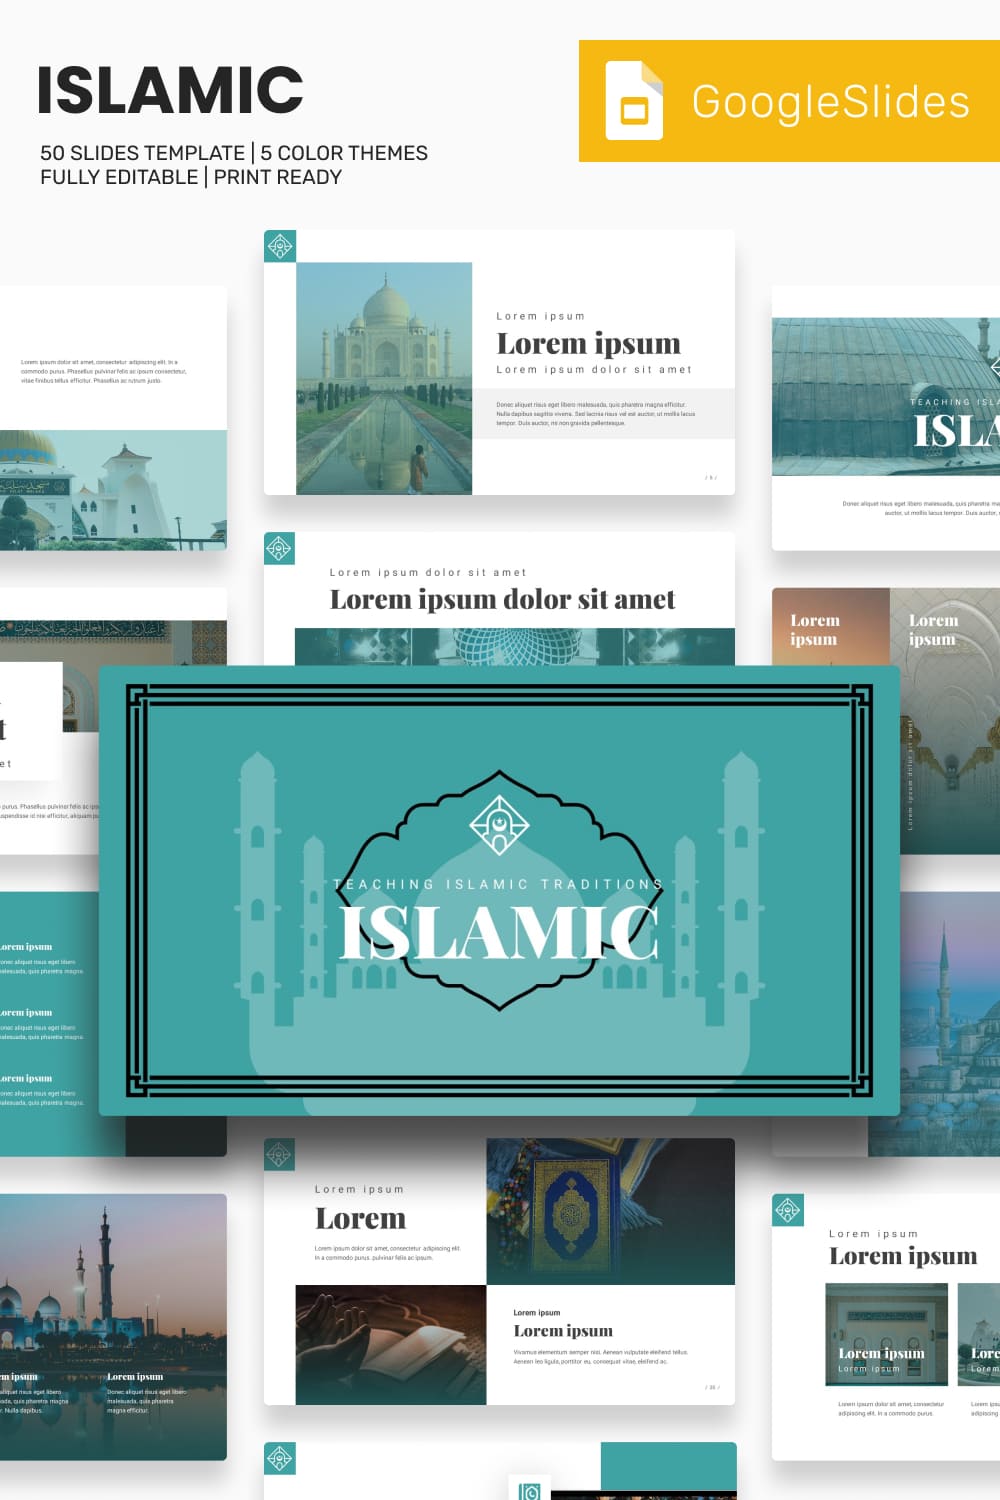 Islamic Presentation Google Slides Theme.